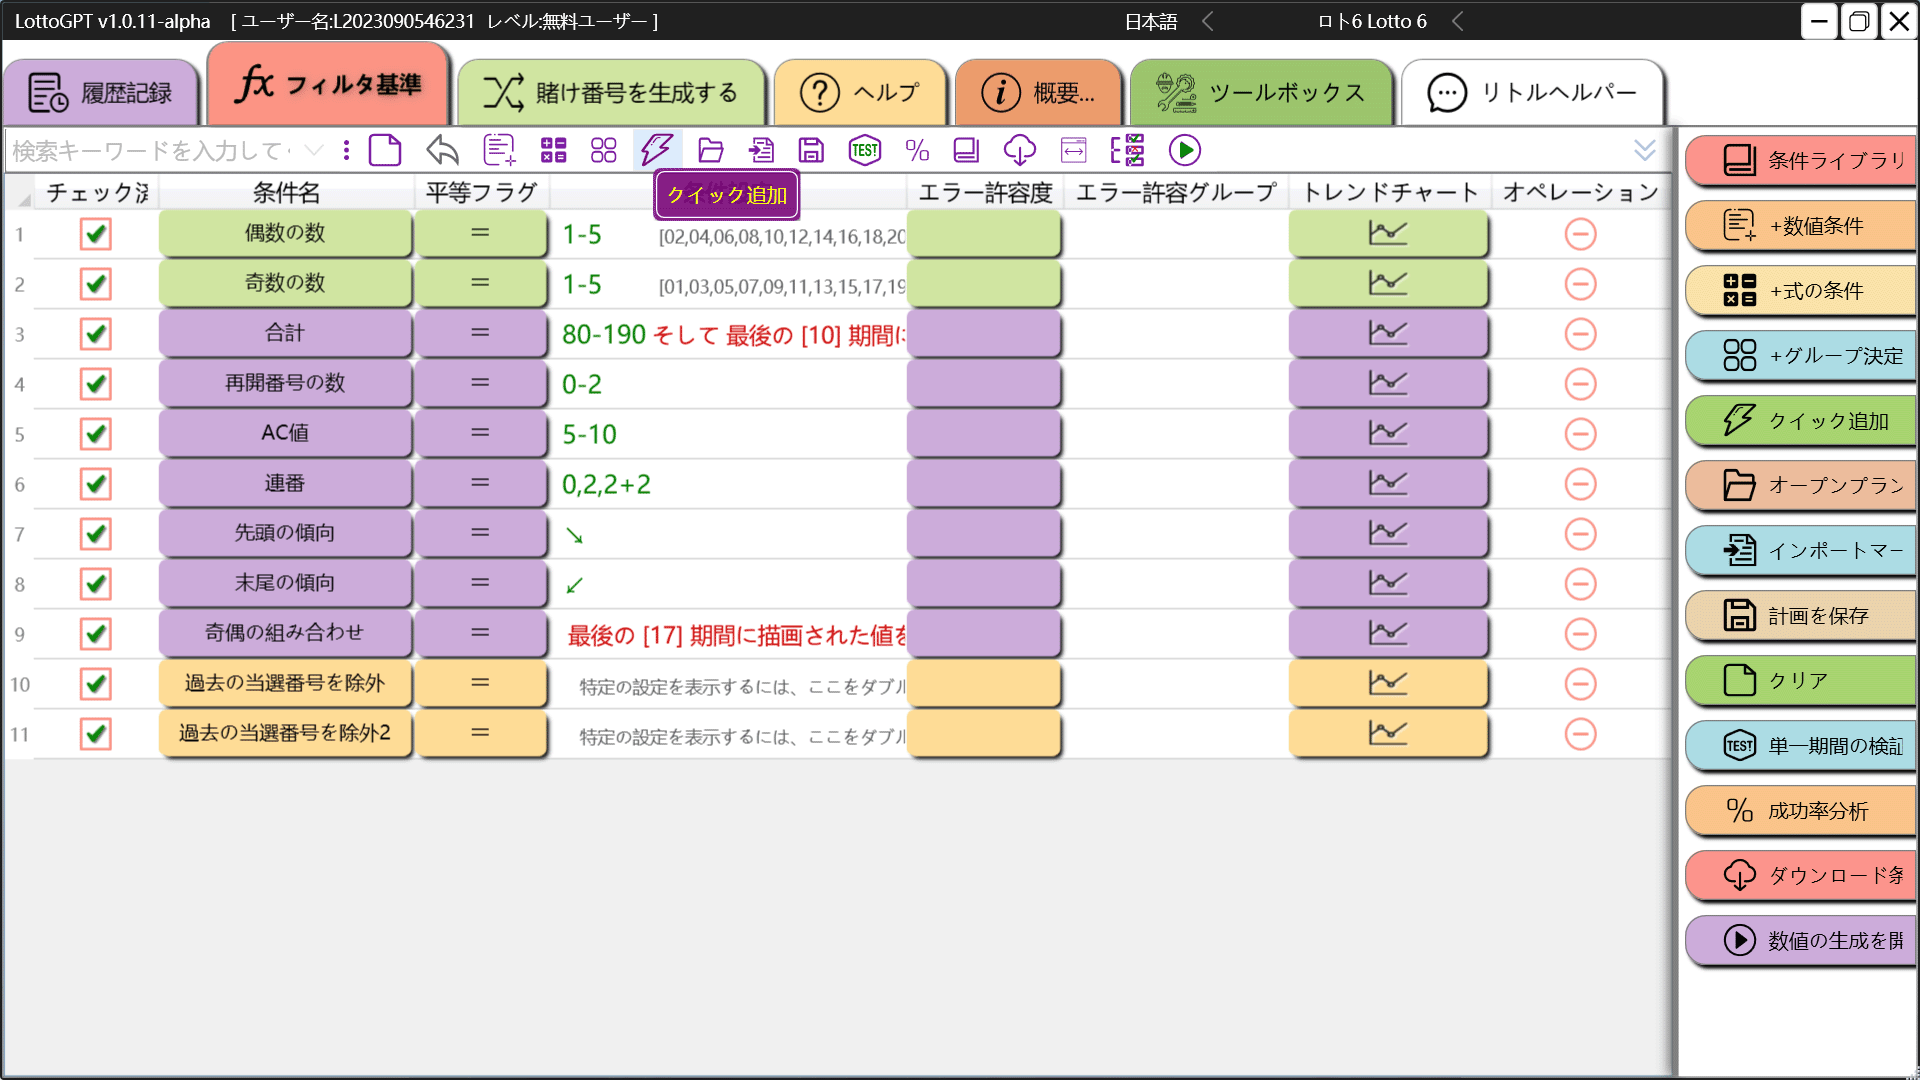 screenshot of lottoGPT interface 4